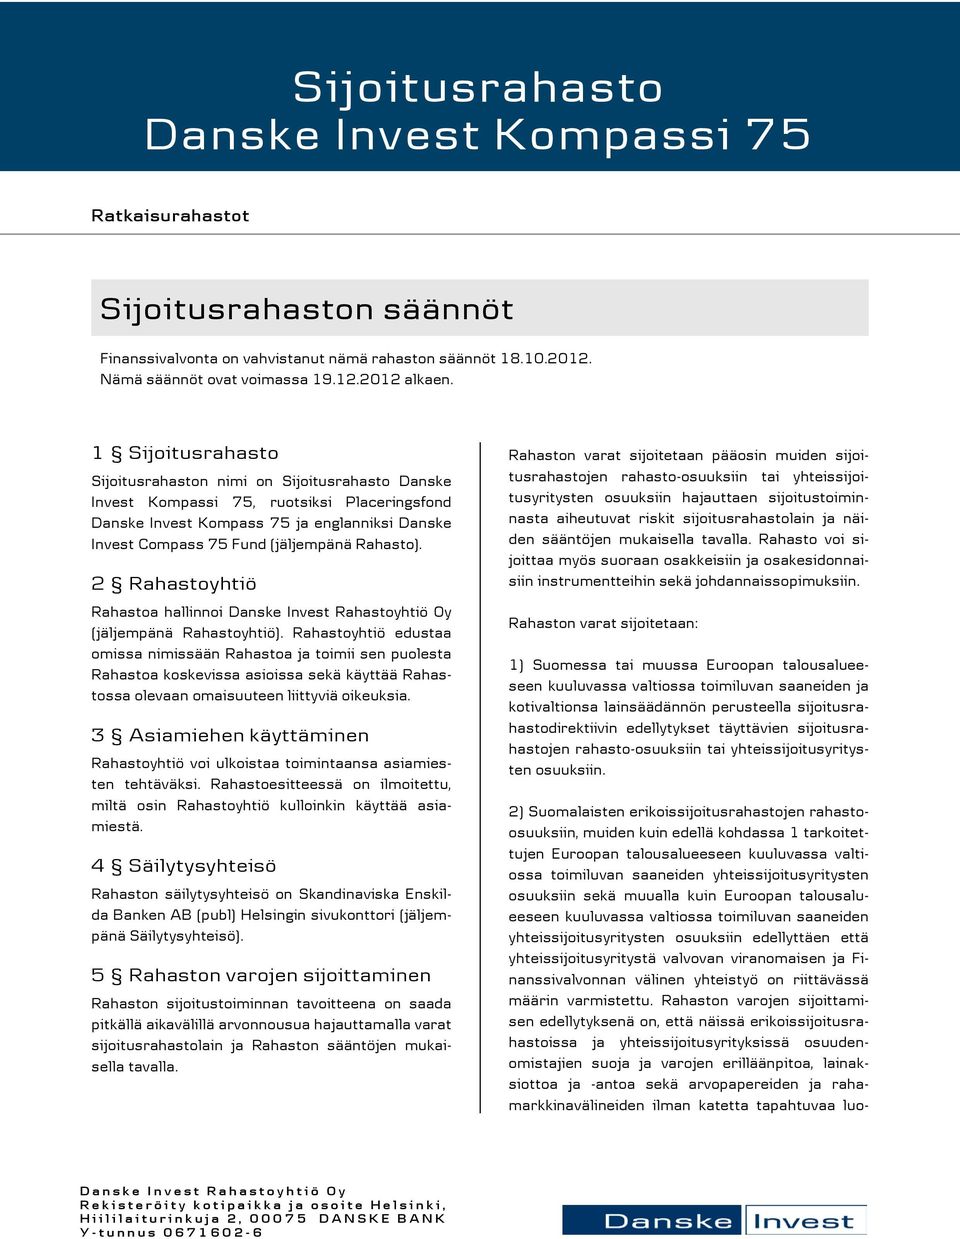 S i joitusrahasto Danske Invest Kompassi PDF Free Download